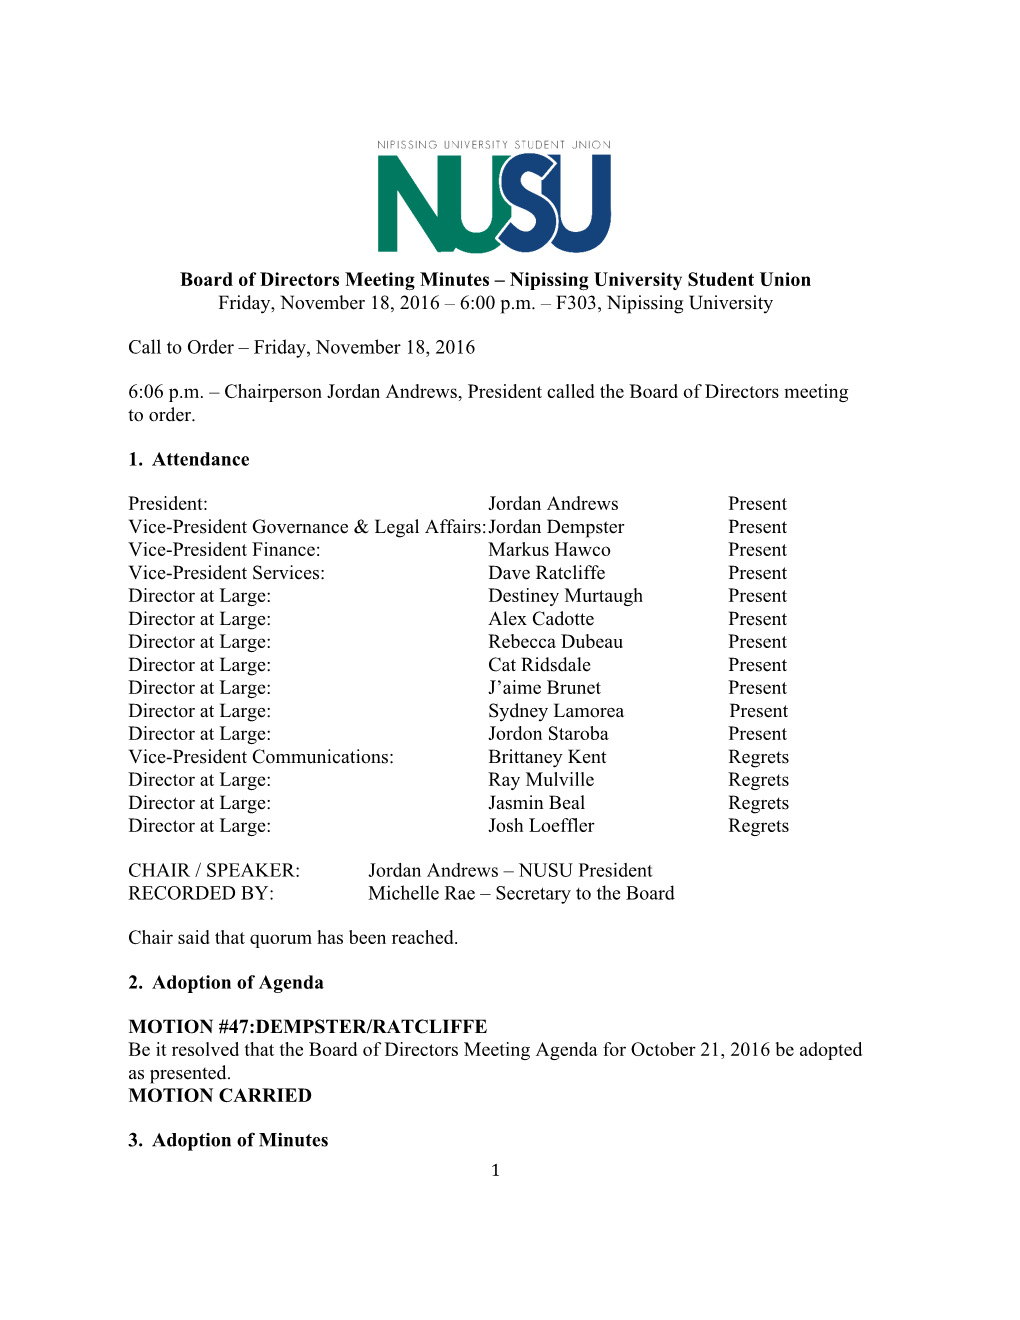 Board of Directors Meeting Minutes – Nipissing University Student Union Friday, November 18, 2016 – 6:00 P.M